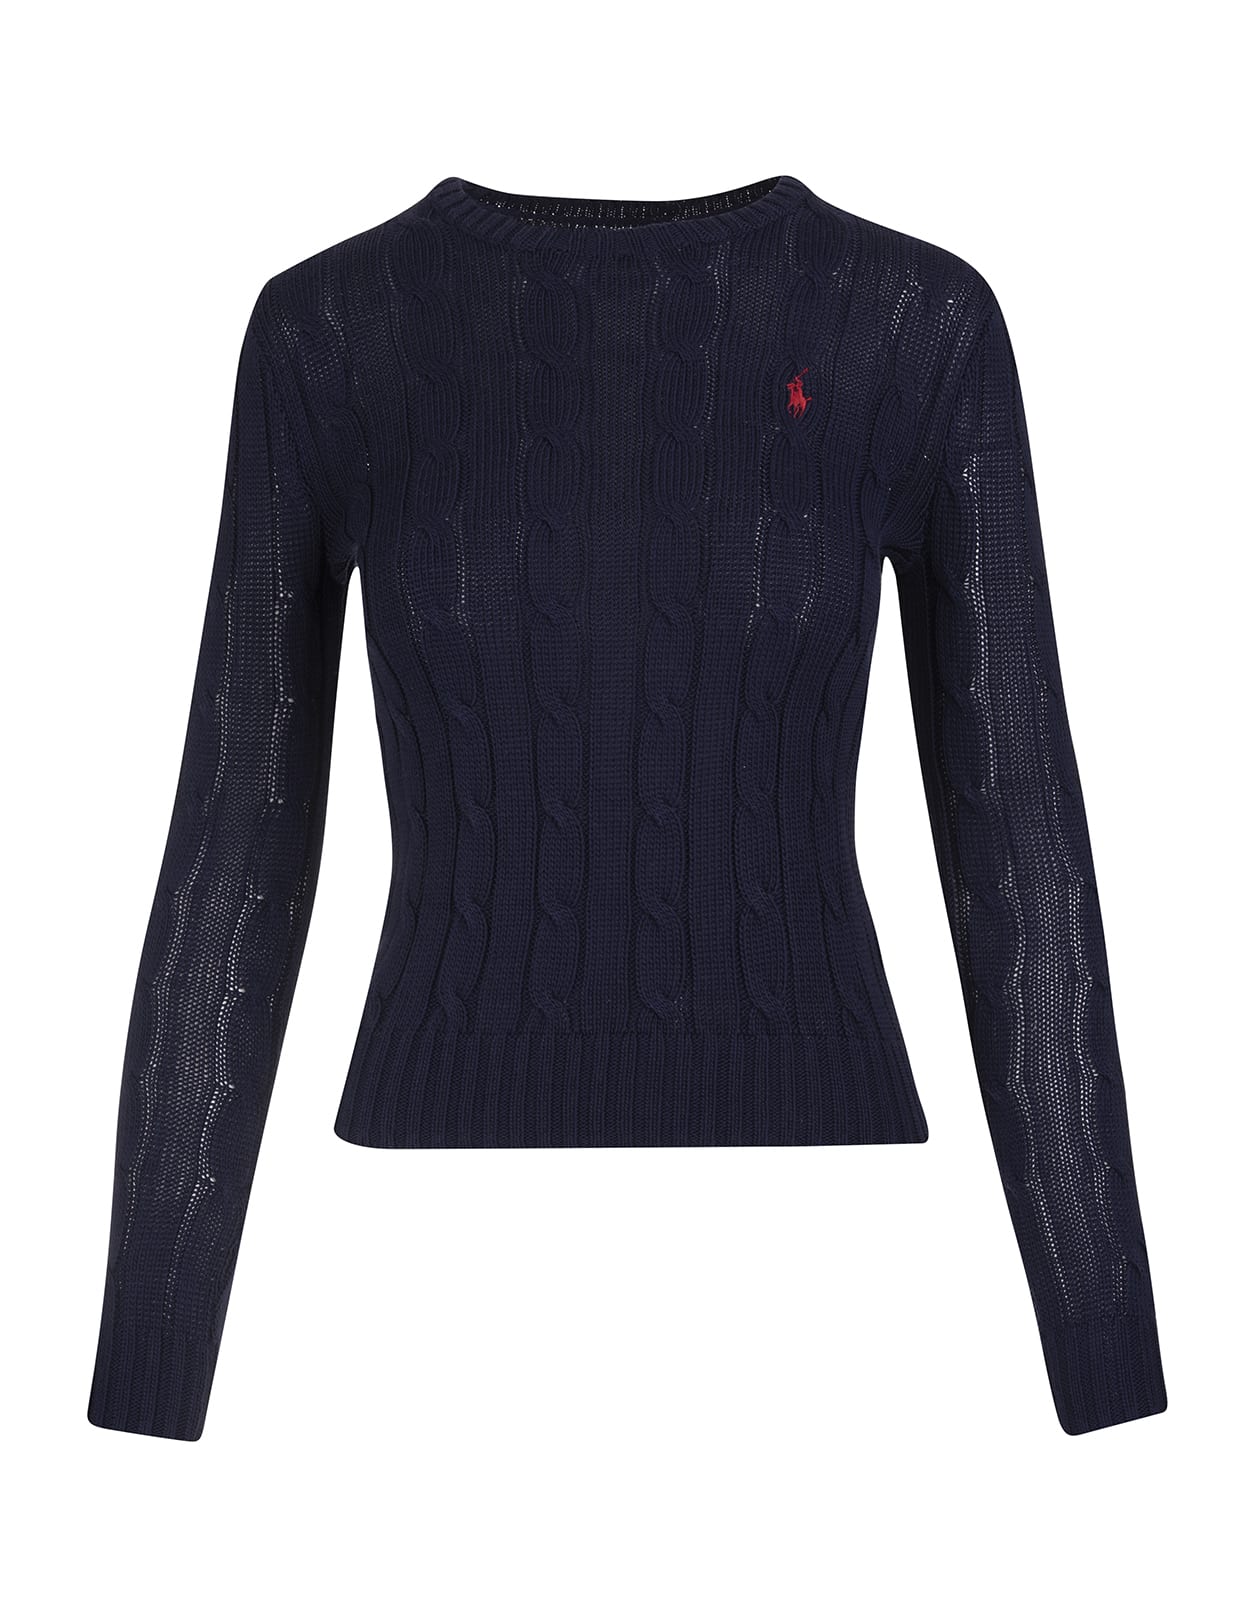 Ralph Lauren Woman Slim Fit Navy Blue Cable Sweater